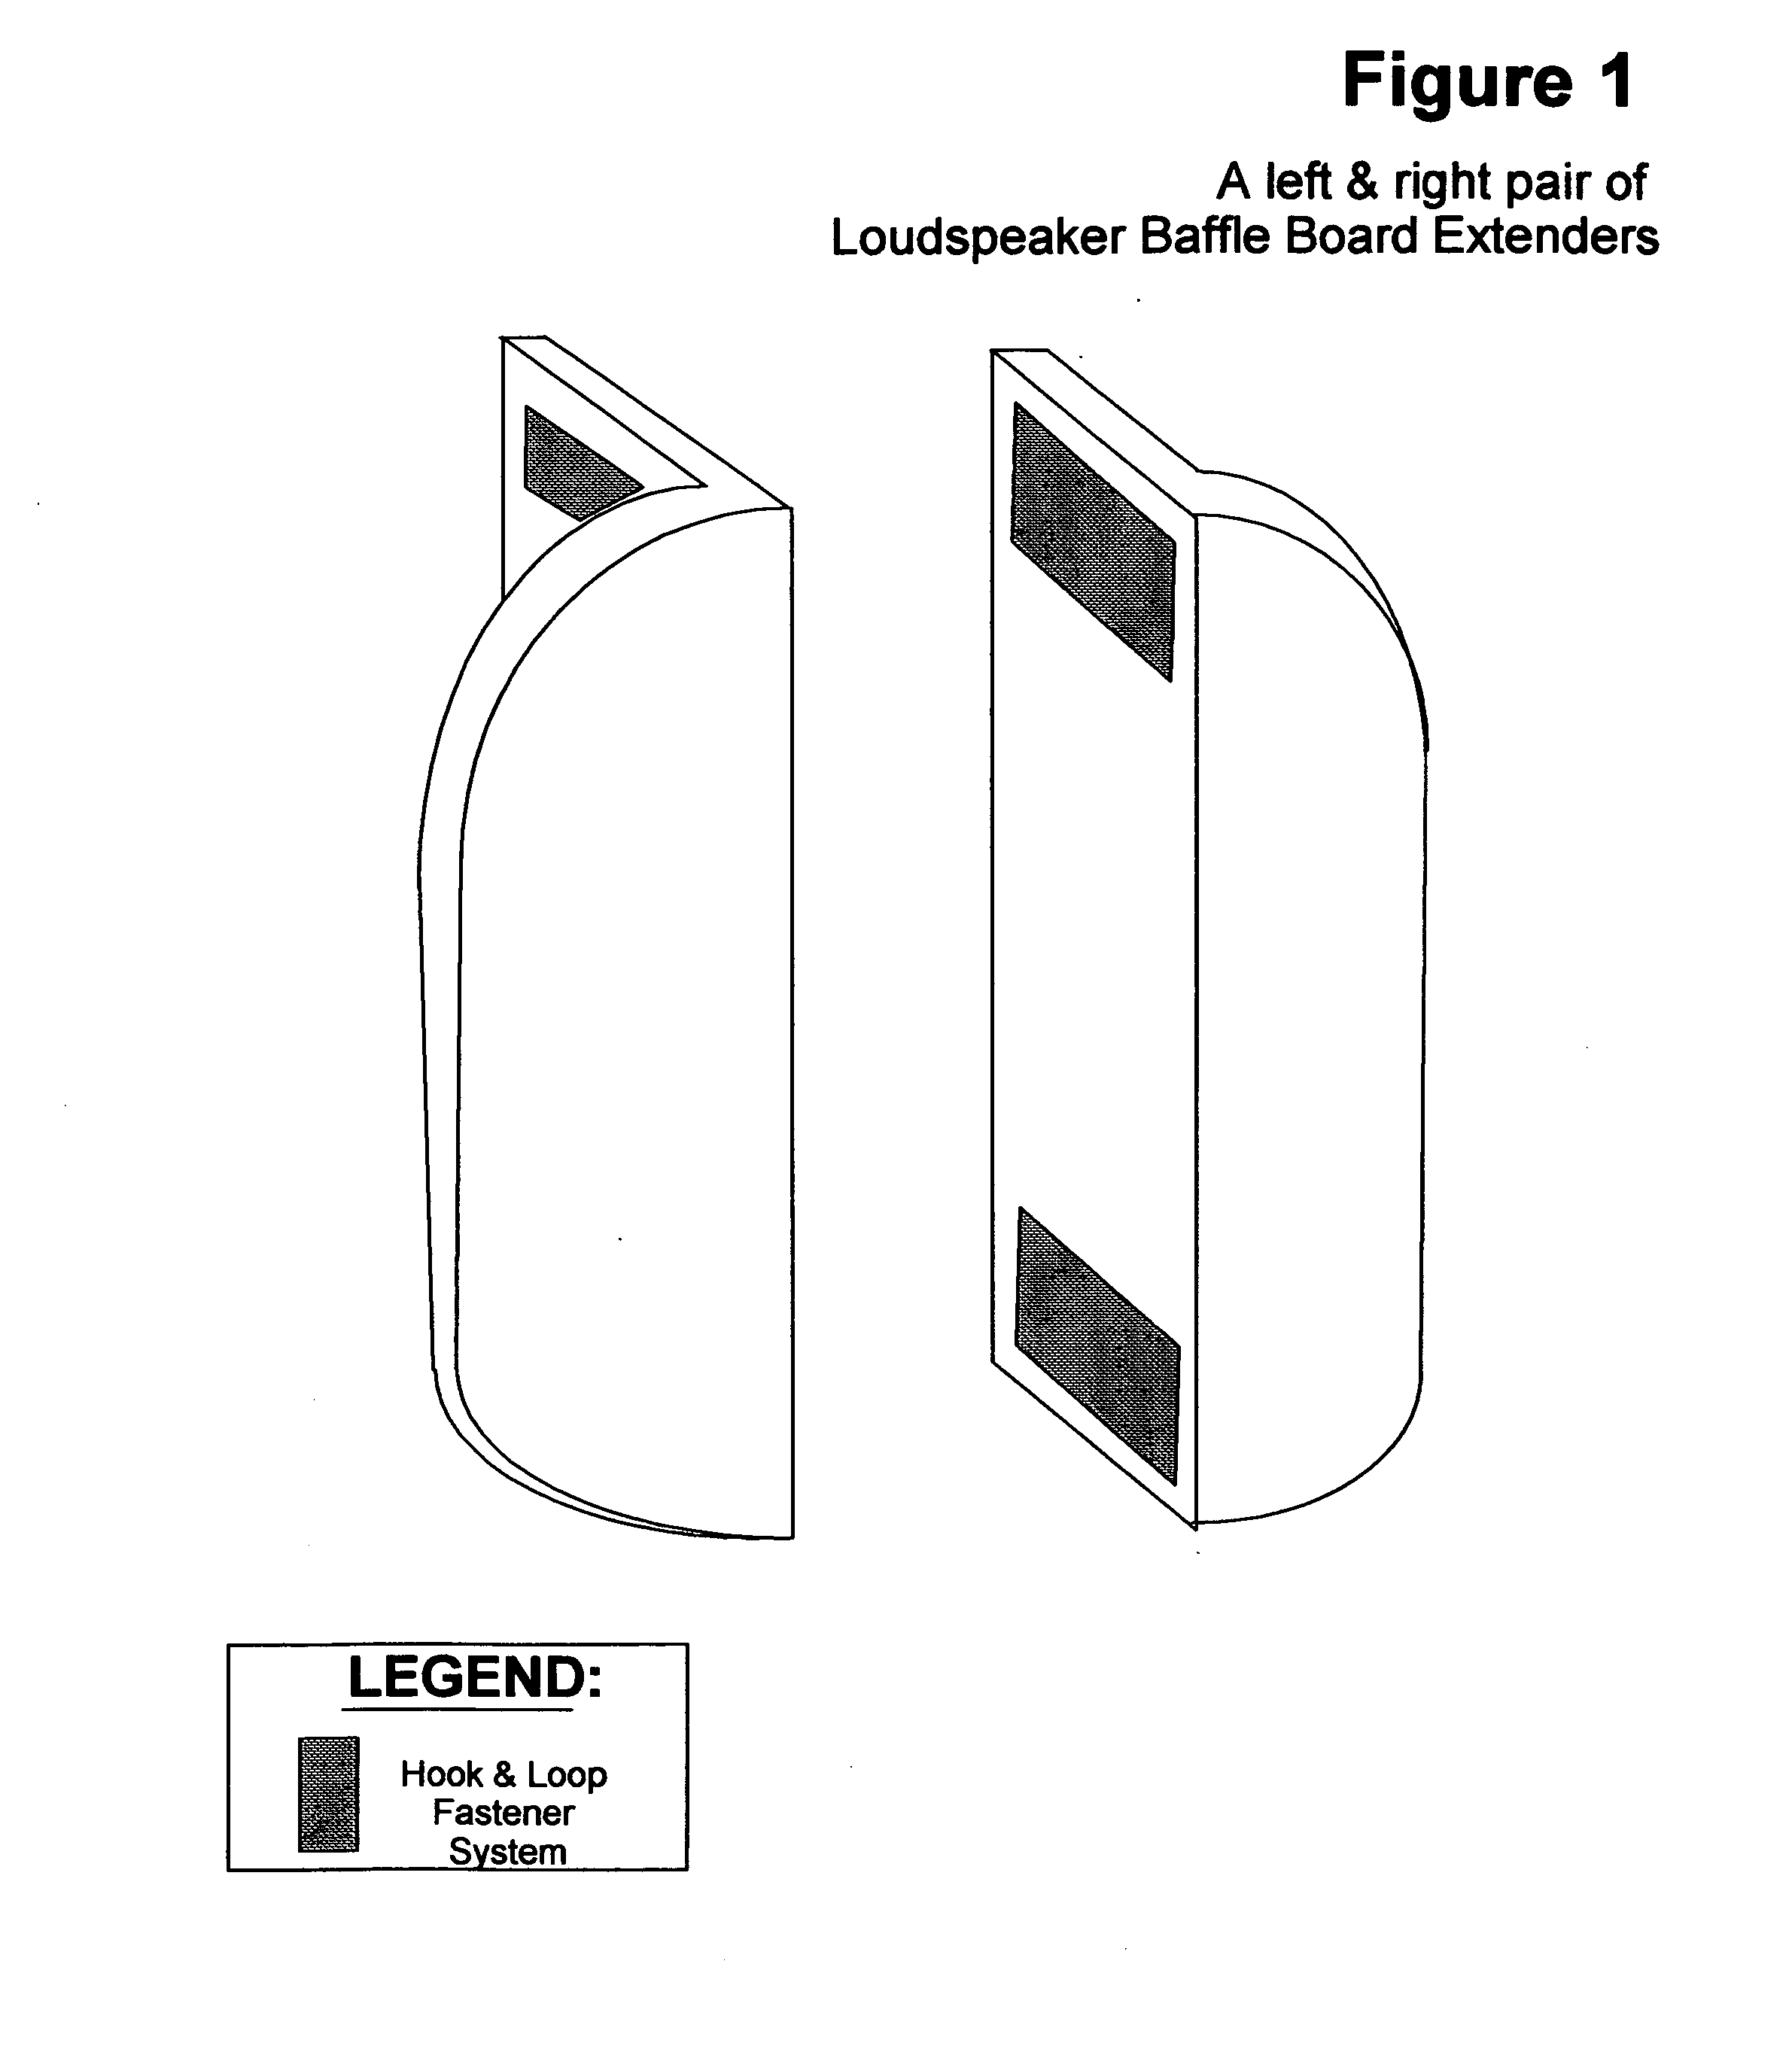 Loudspeaker baffle board extender